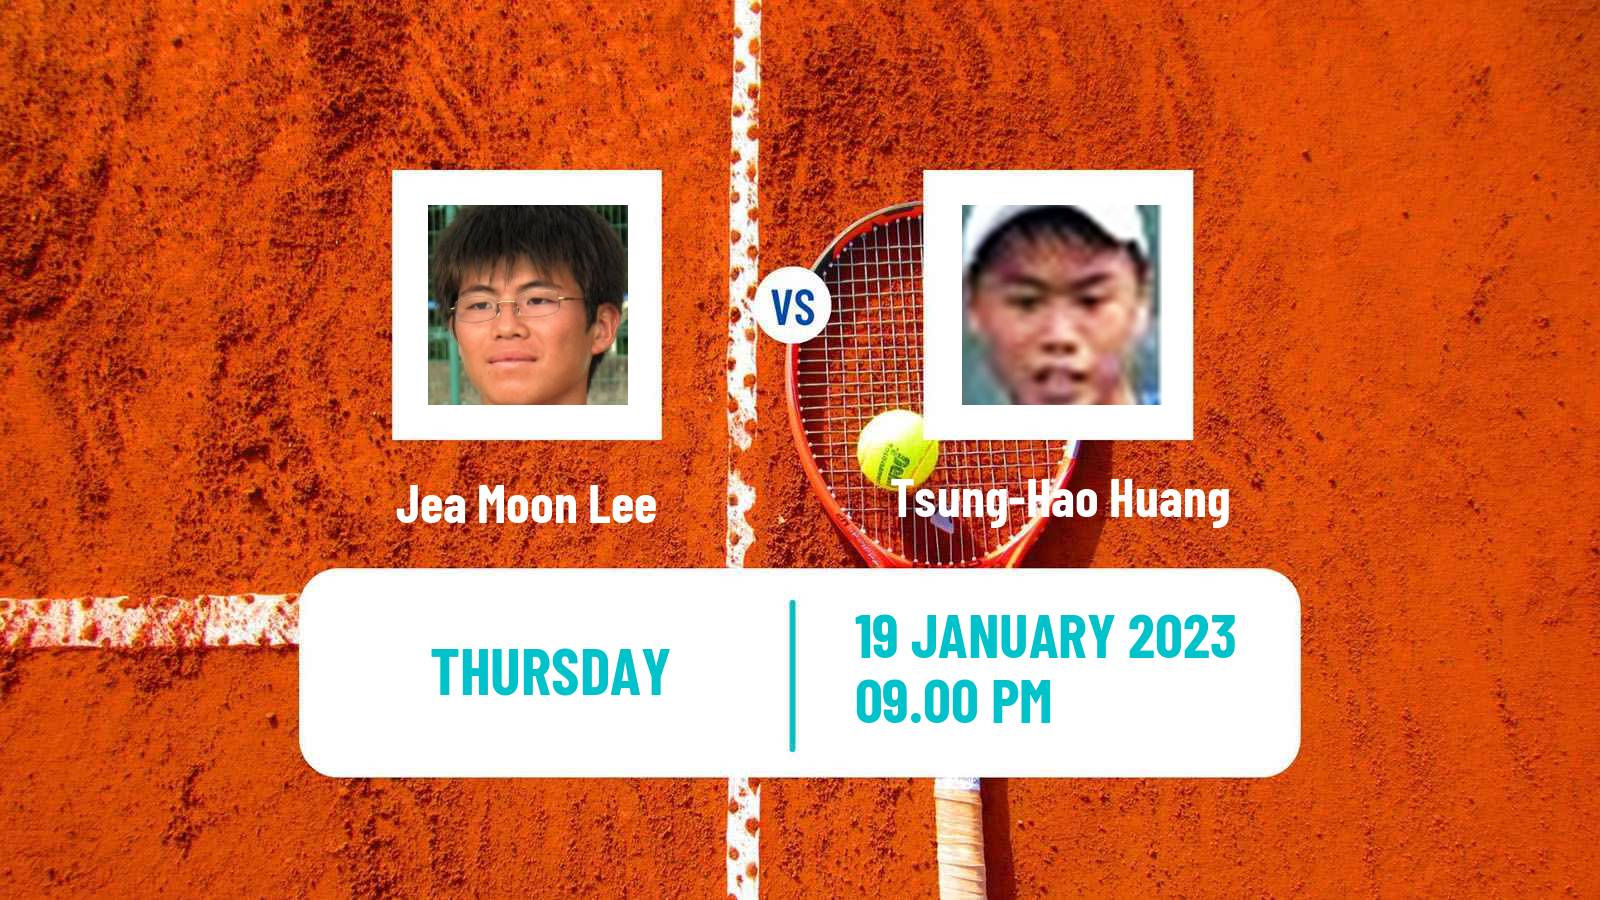 Tennis ITF Tournaments Jea Moon Lee - Tsung-Hao Huang